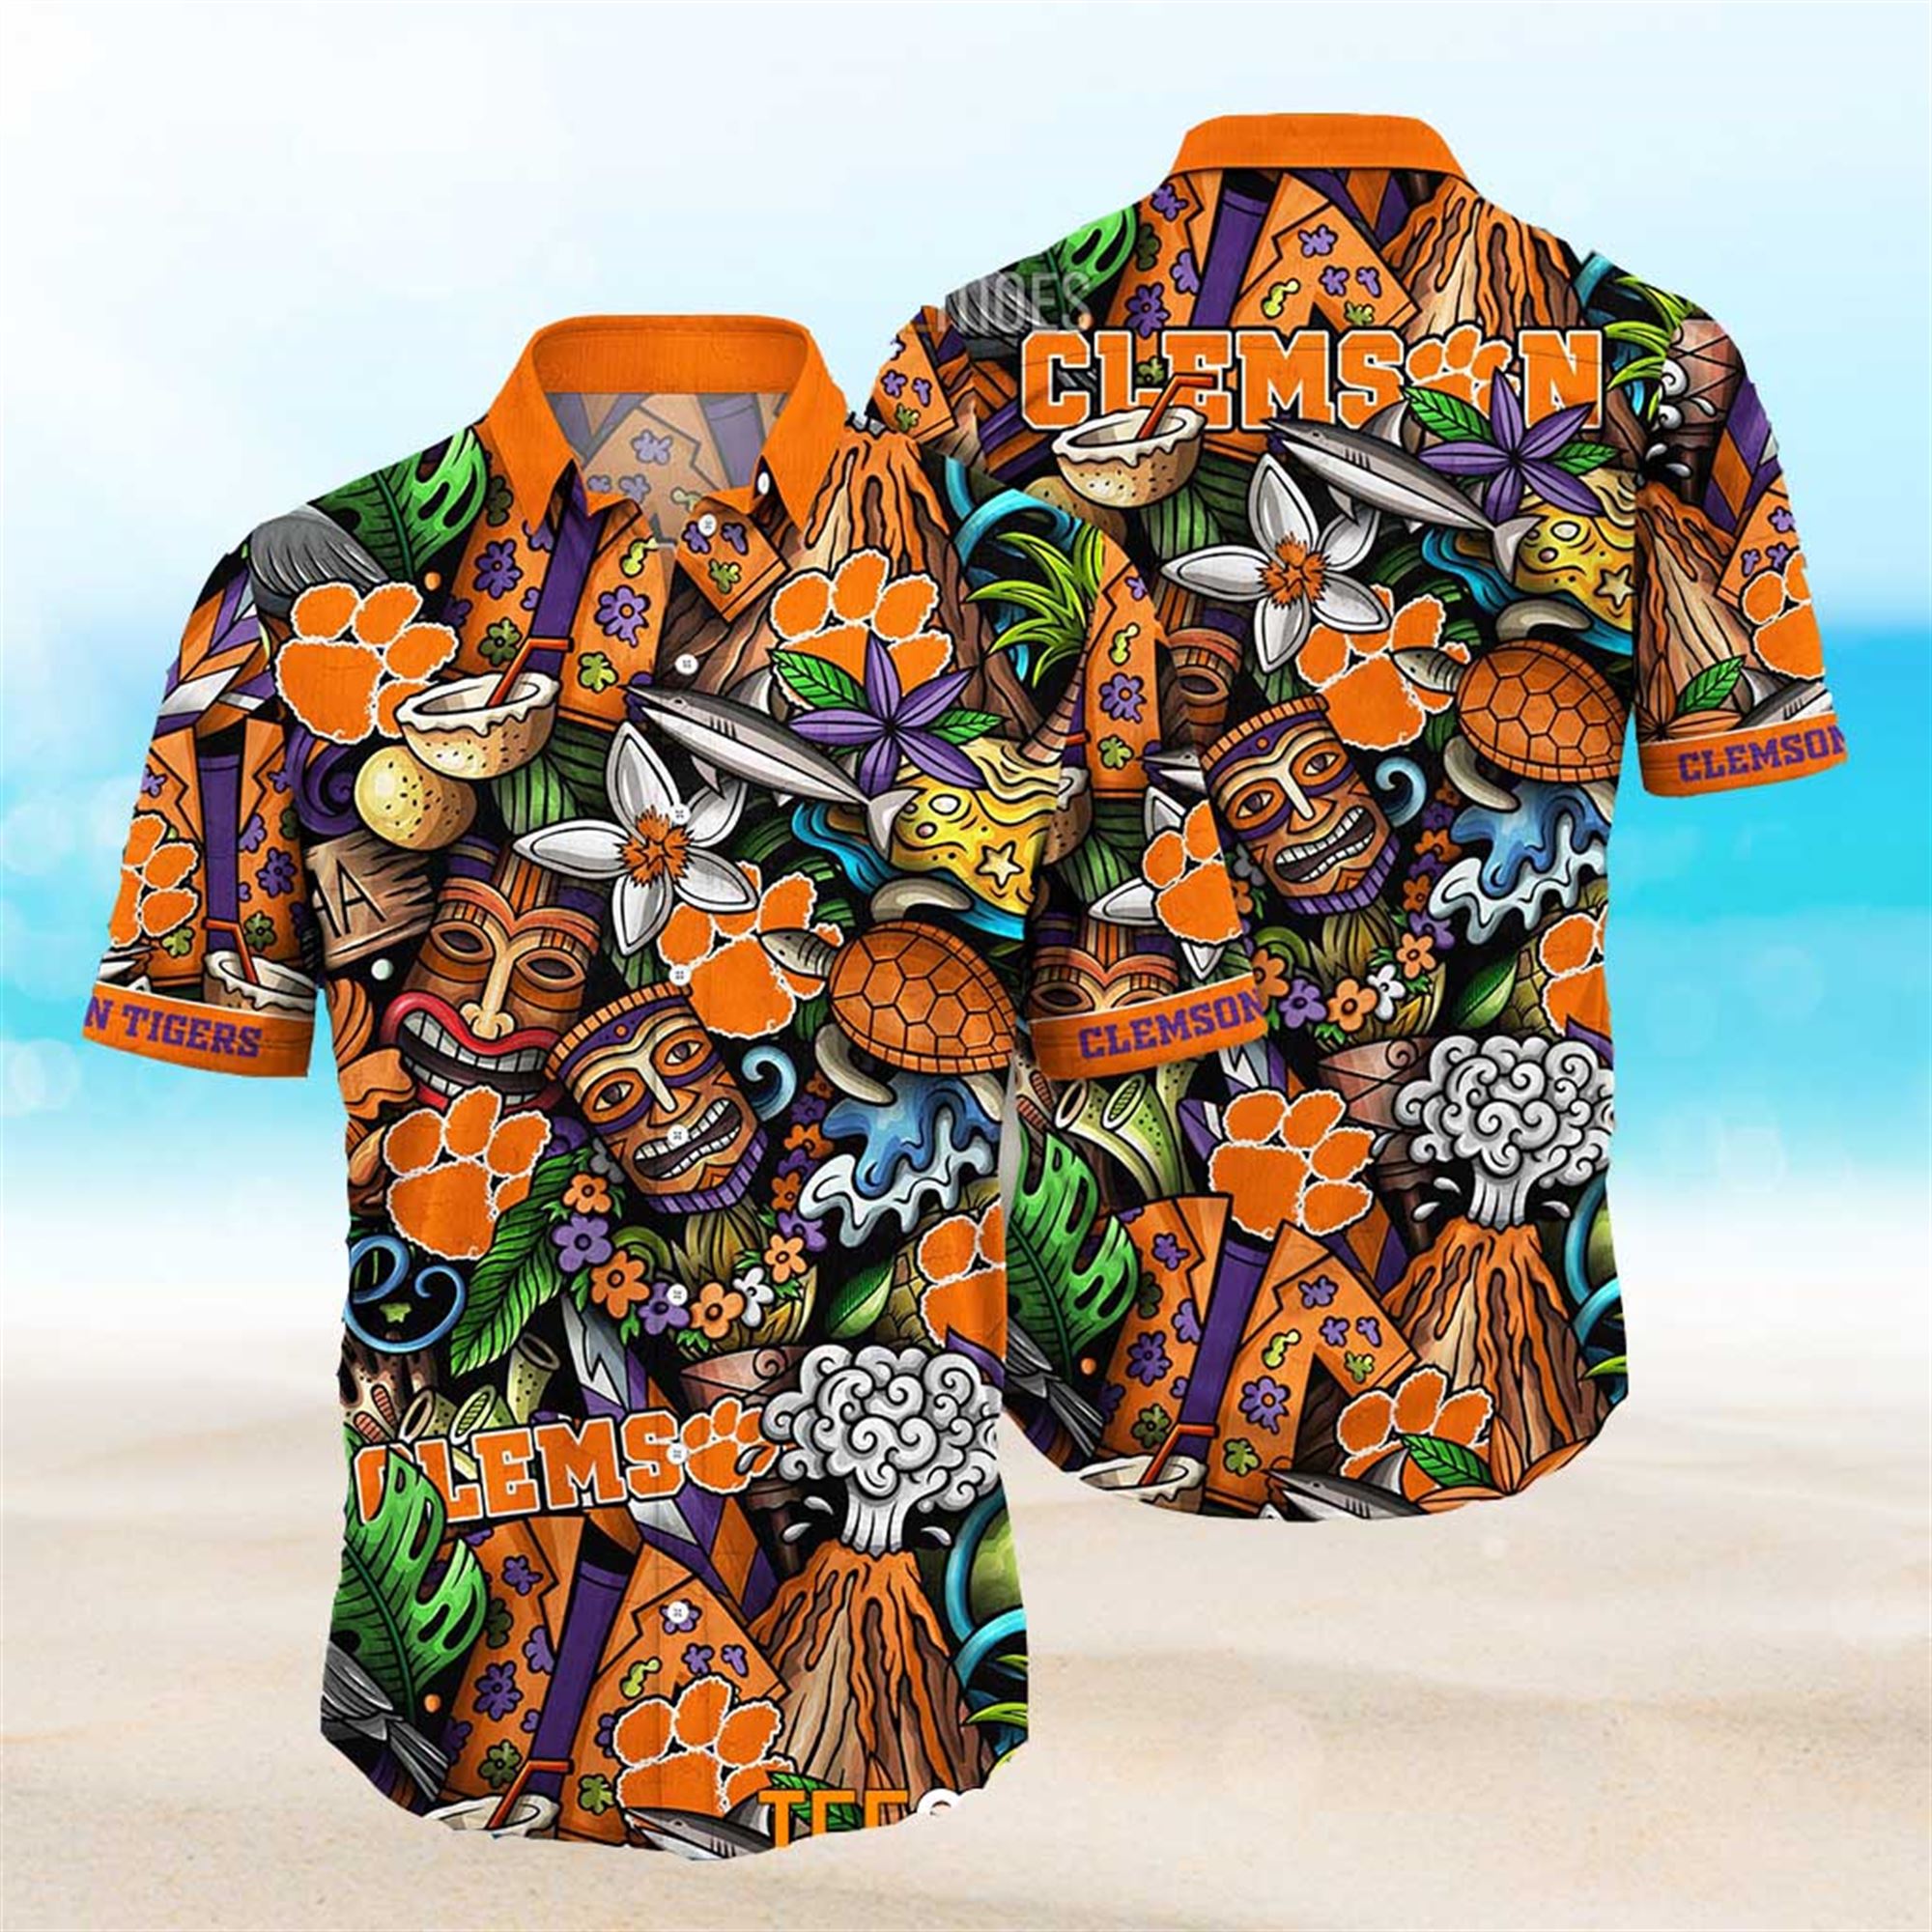 Cincinnati Bearcats Ncaa Mens Floral Special Design Hawaiian Shirt